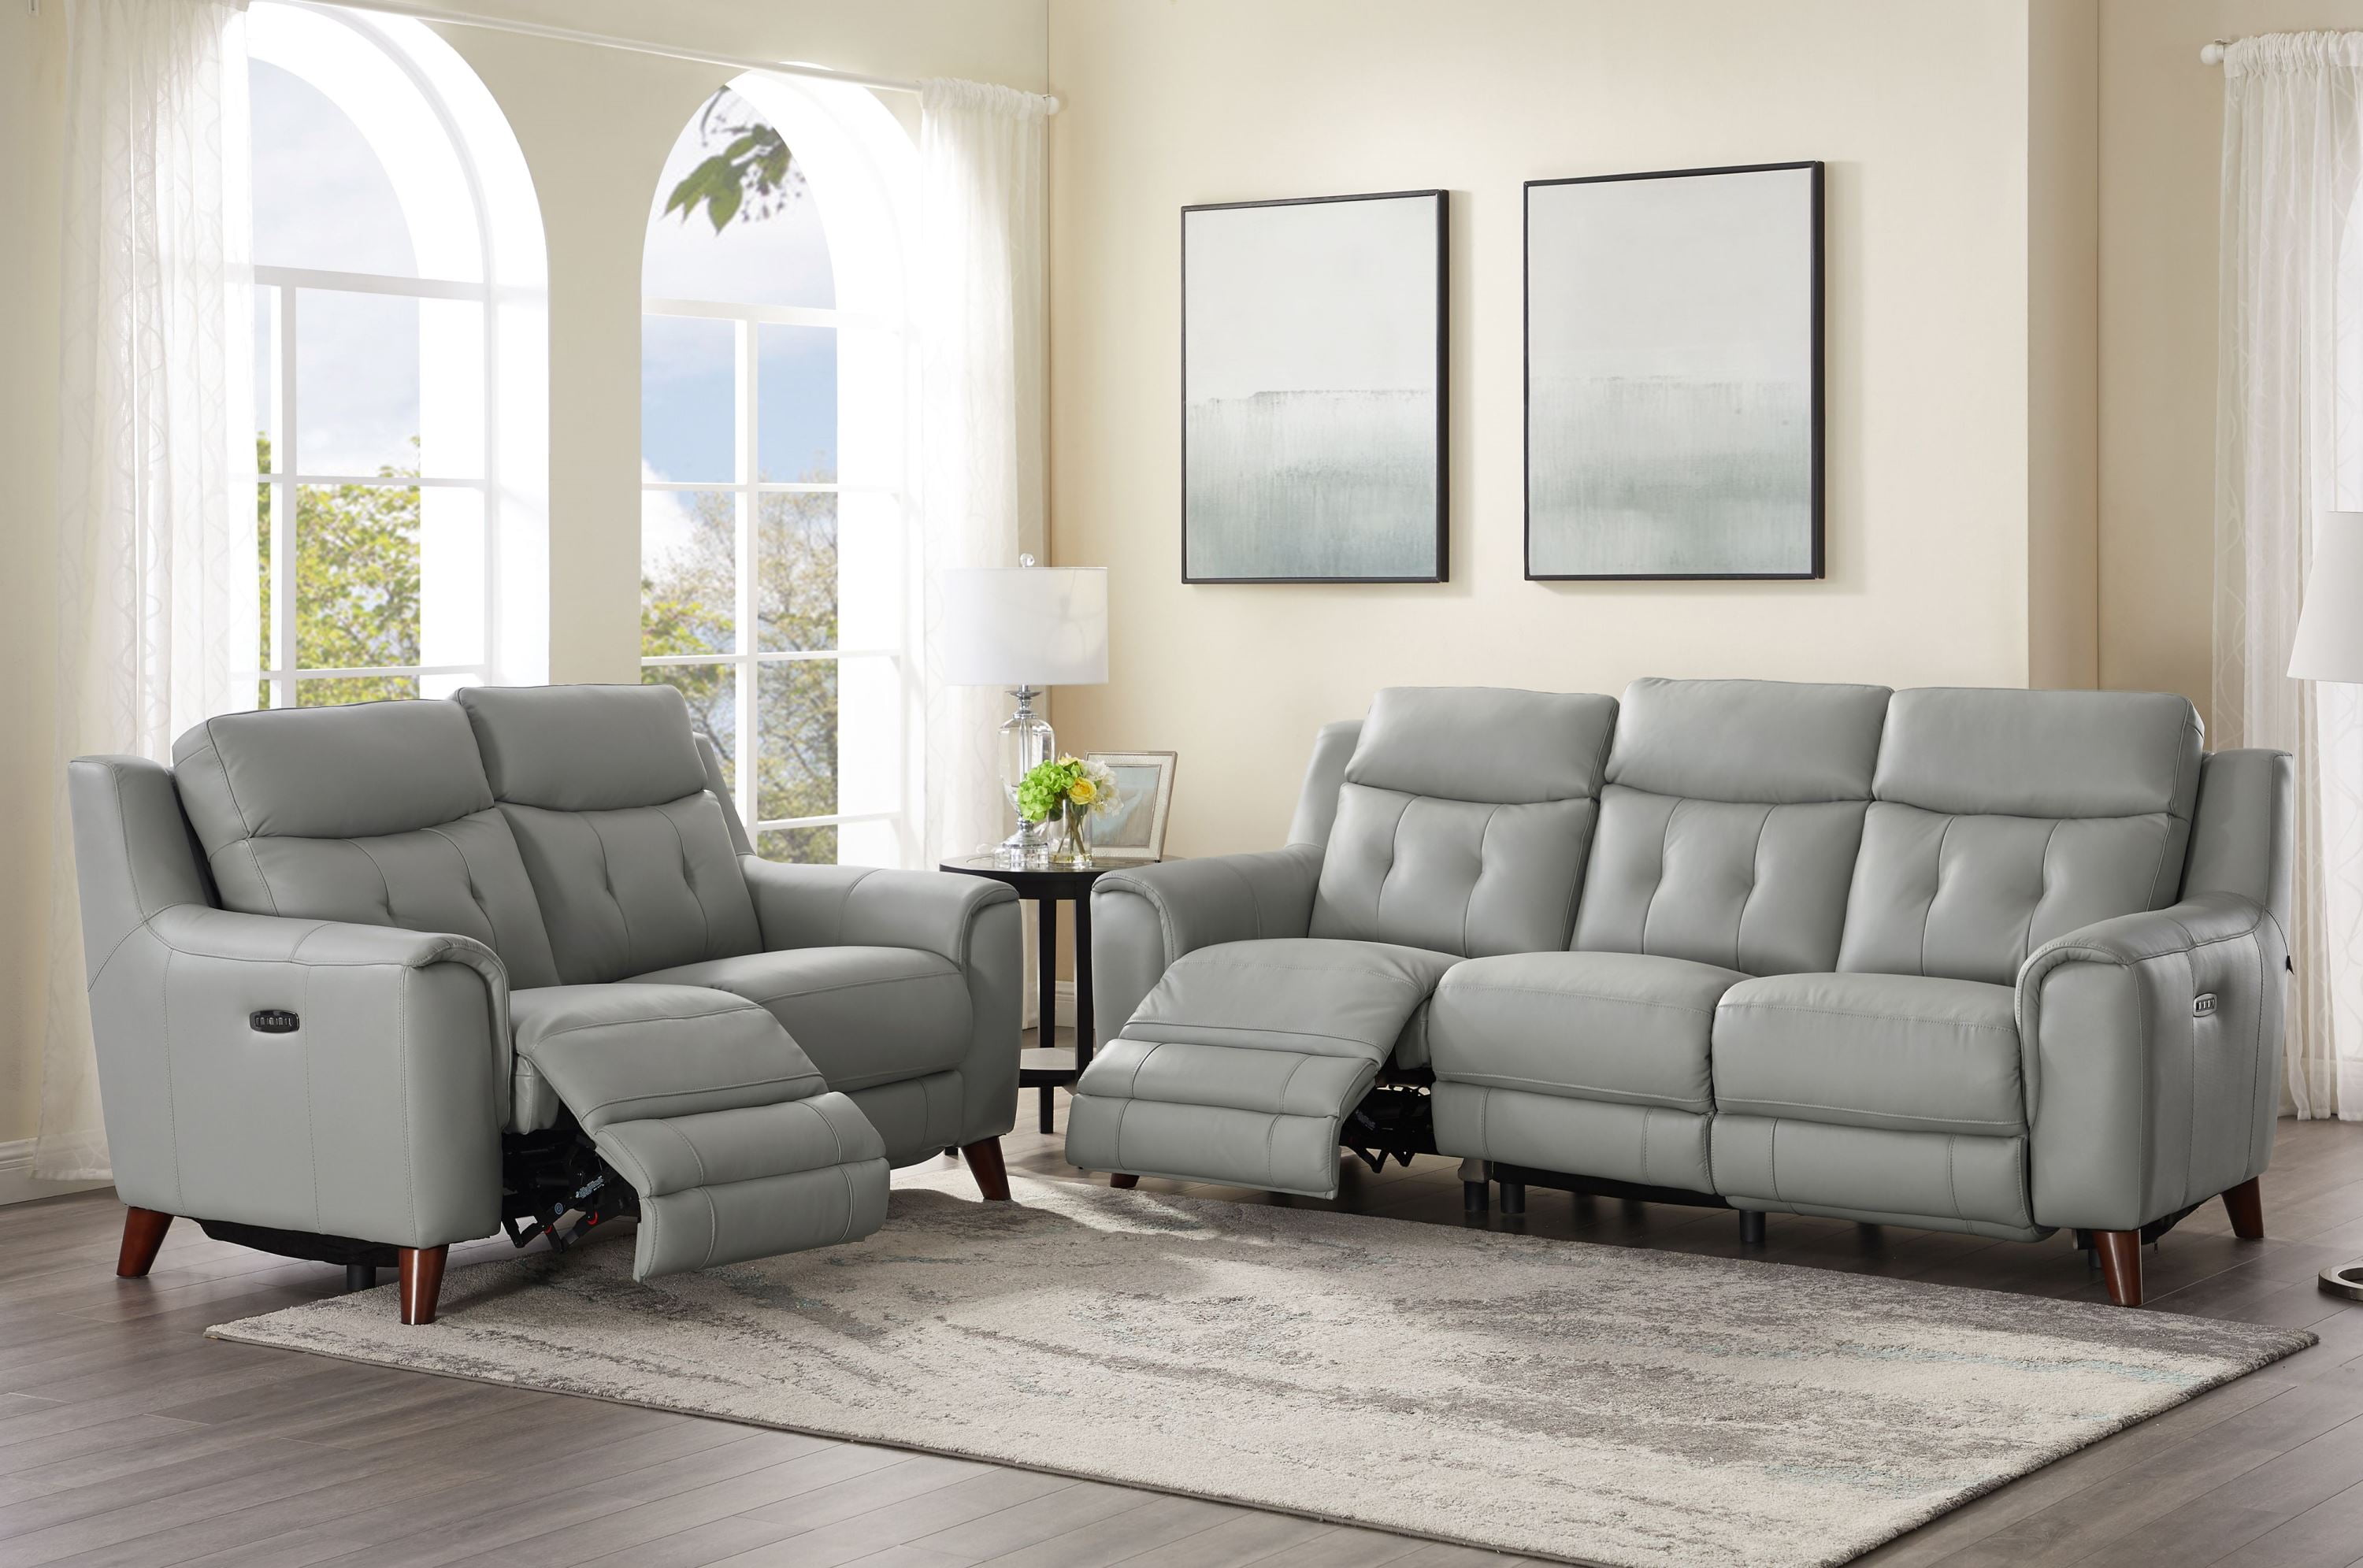 bennato cream leather power reclining sofa